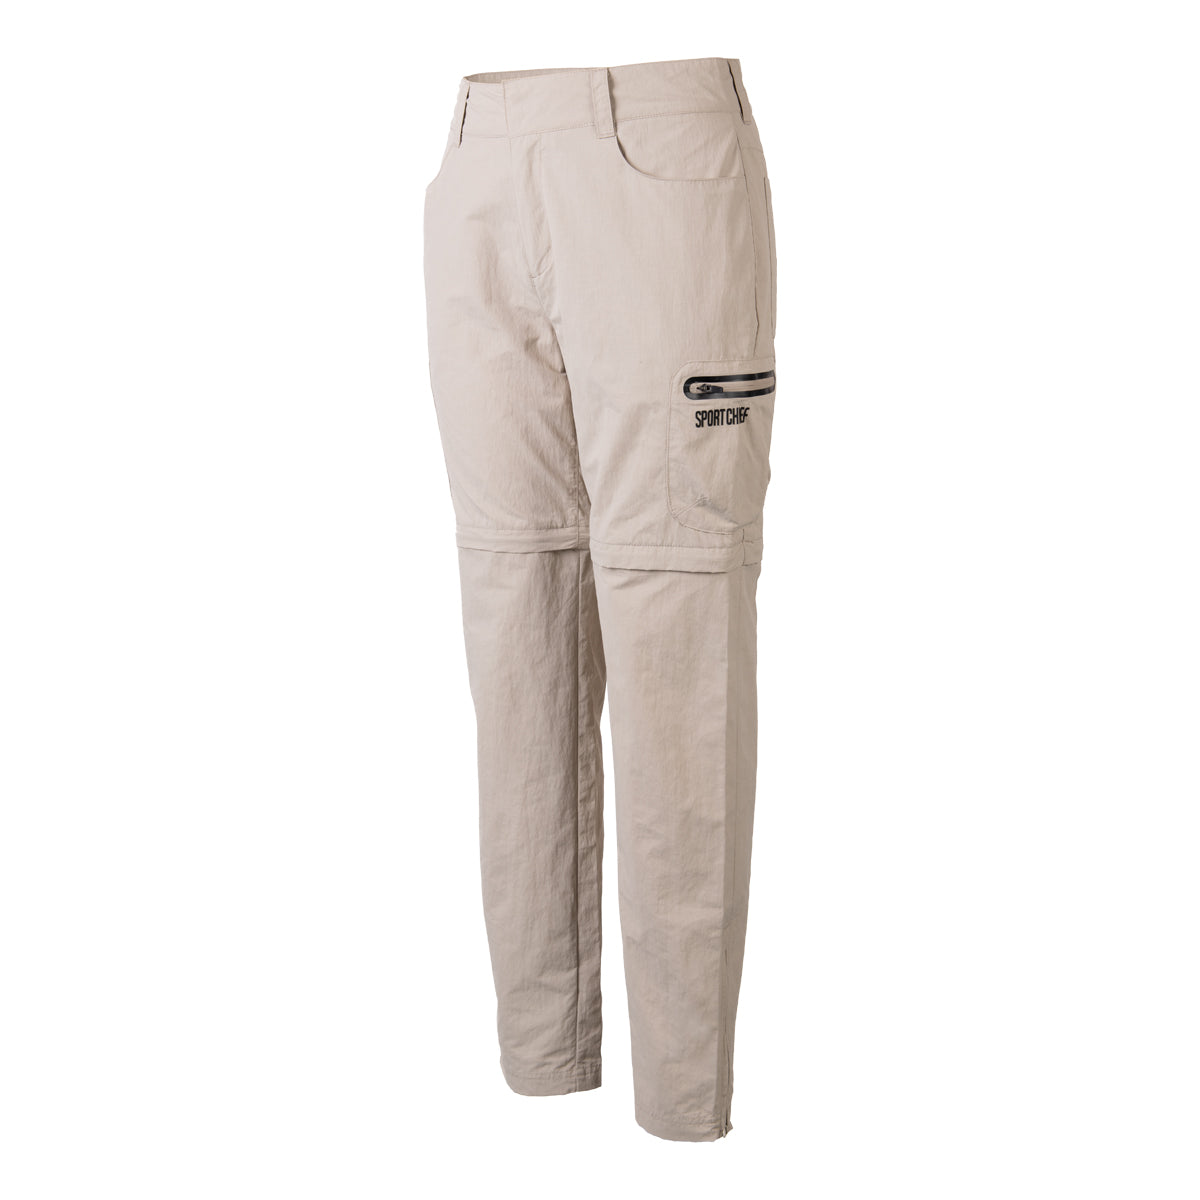 Women's pants "pilgrim" mosquito repellent, beige, for fishing or outdoors